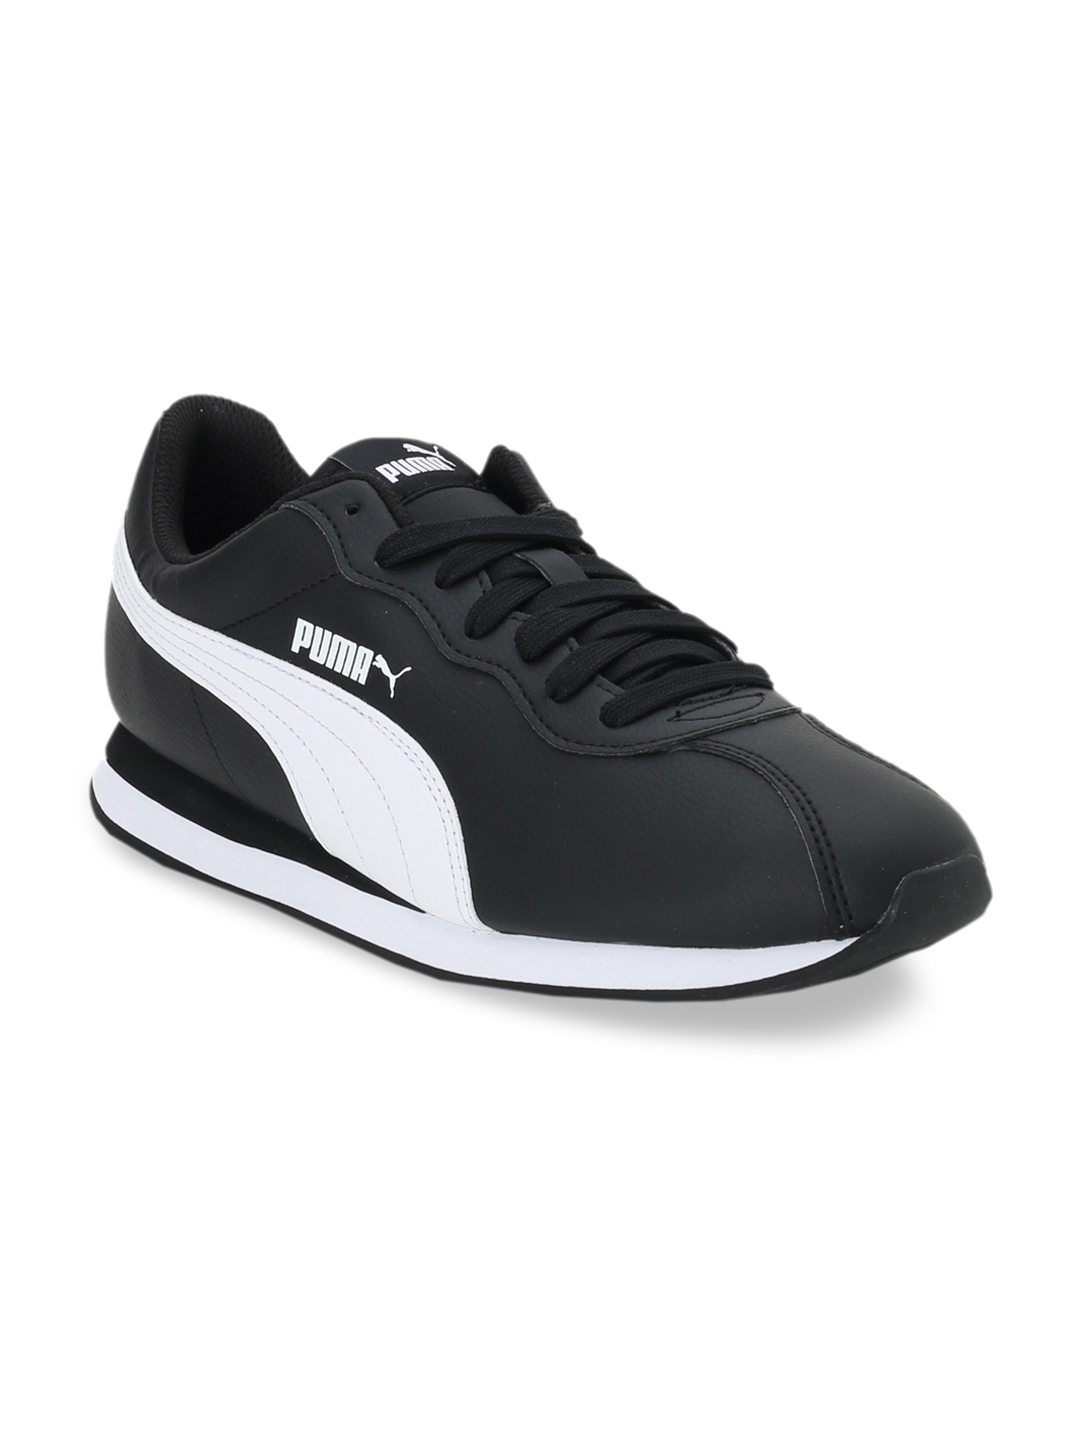 Buy Puma Unisex Black Puma Turin II Sneakers - Casual Shoes for Unisex ...